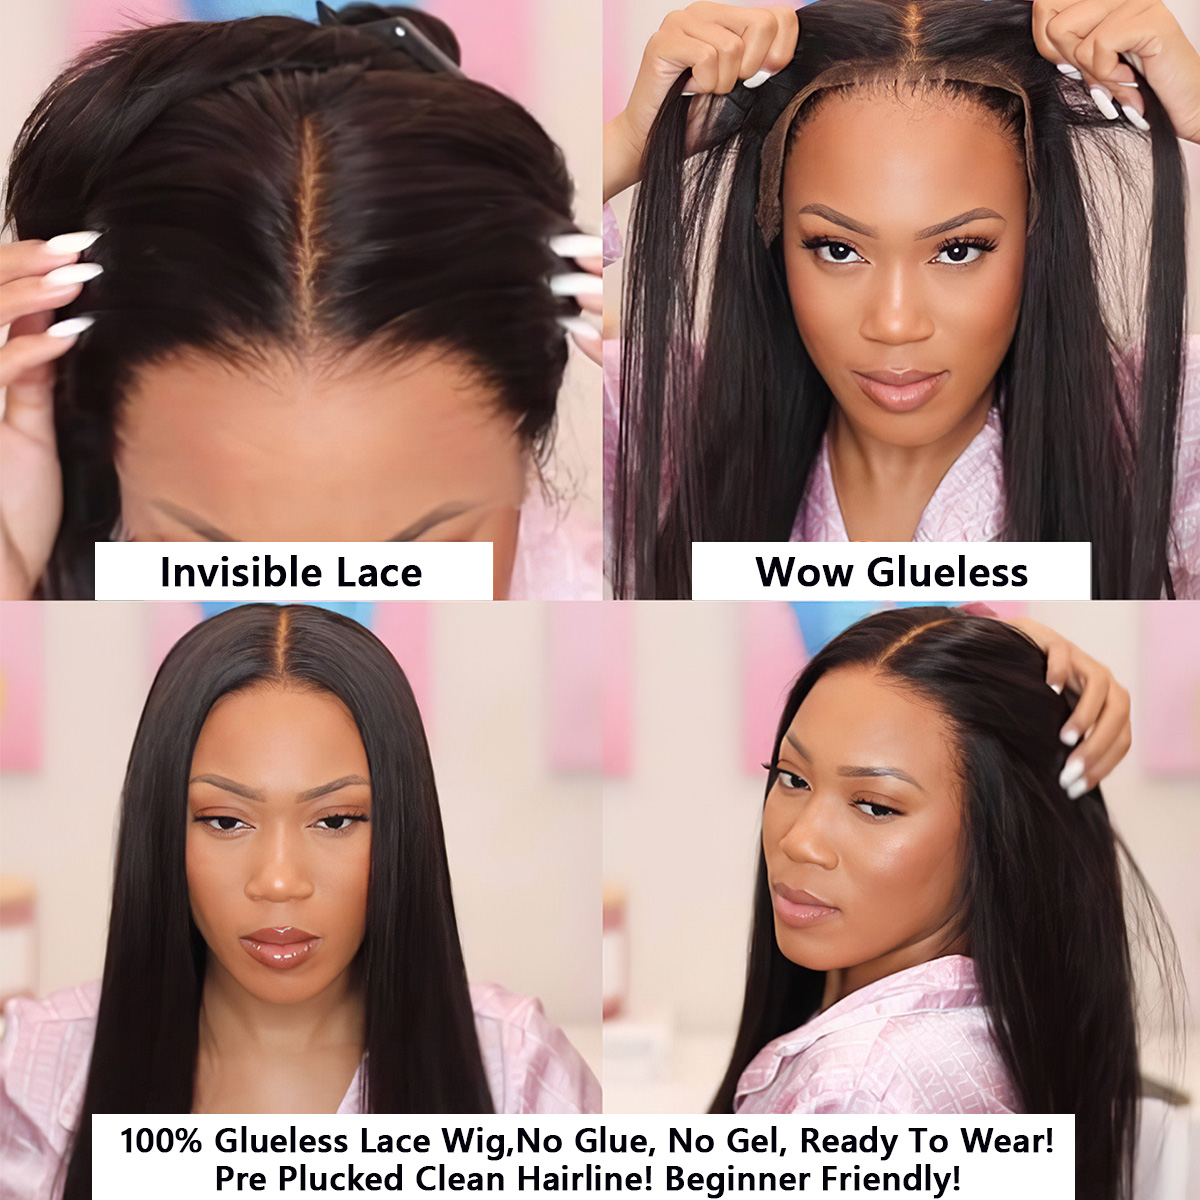 Glueless lace wig